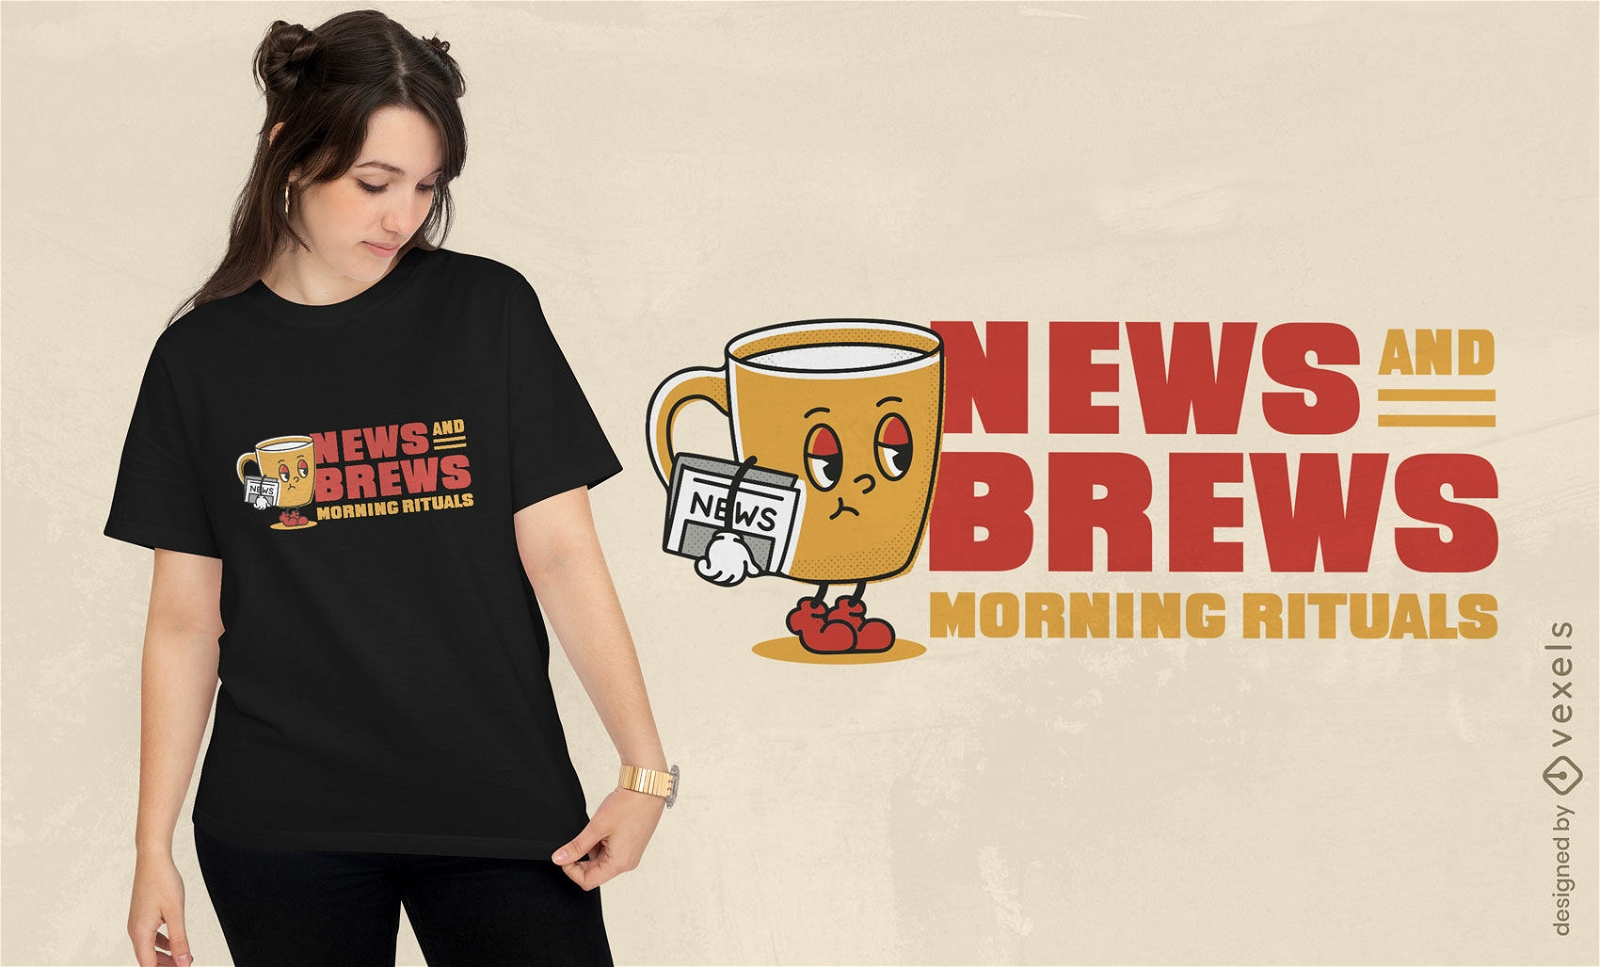 Morning rituals news and brews t-shirt design